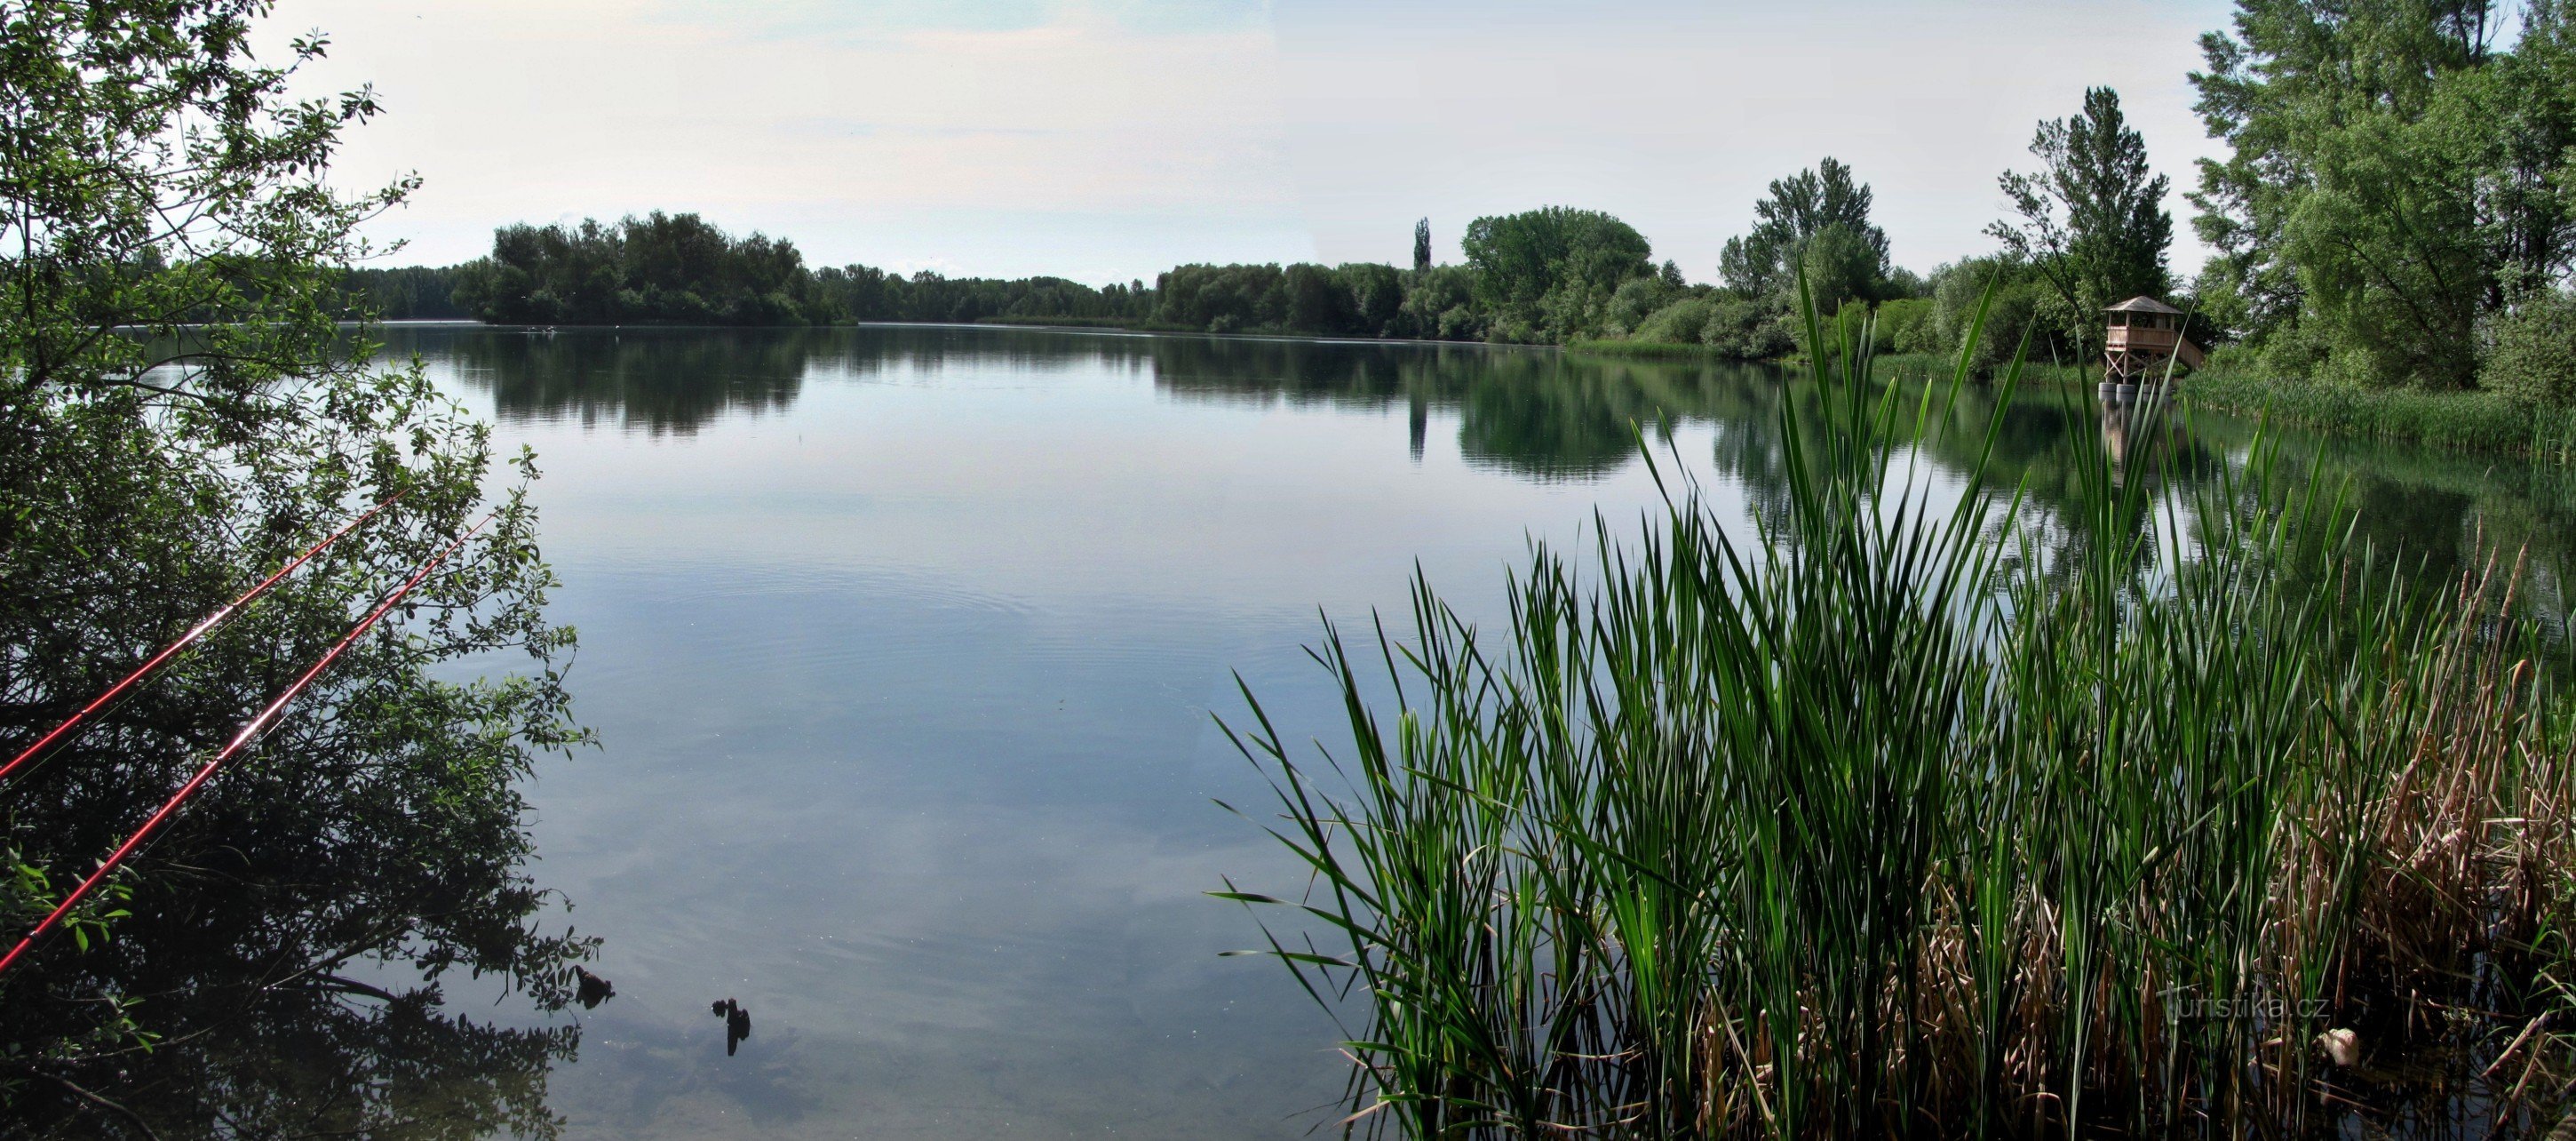 Chomoutov (κοντά στο Olomouc) - παρατηρητήριο πουλιών στη λίμνη Chomoutov